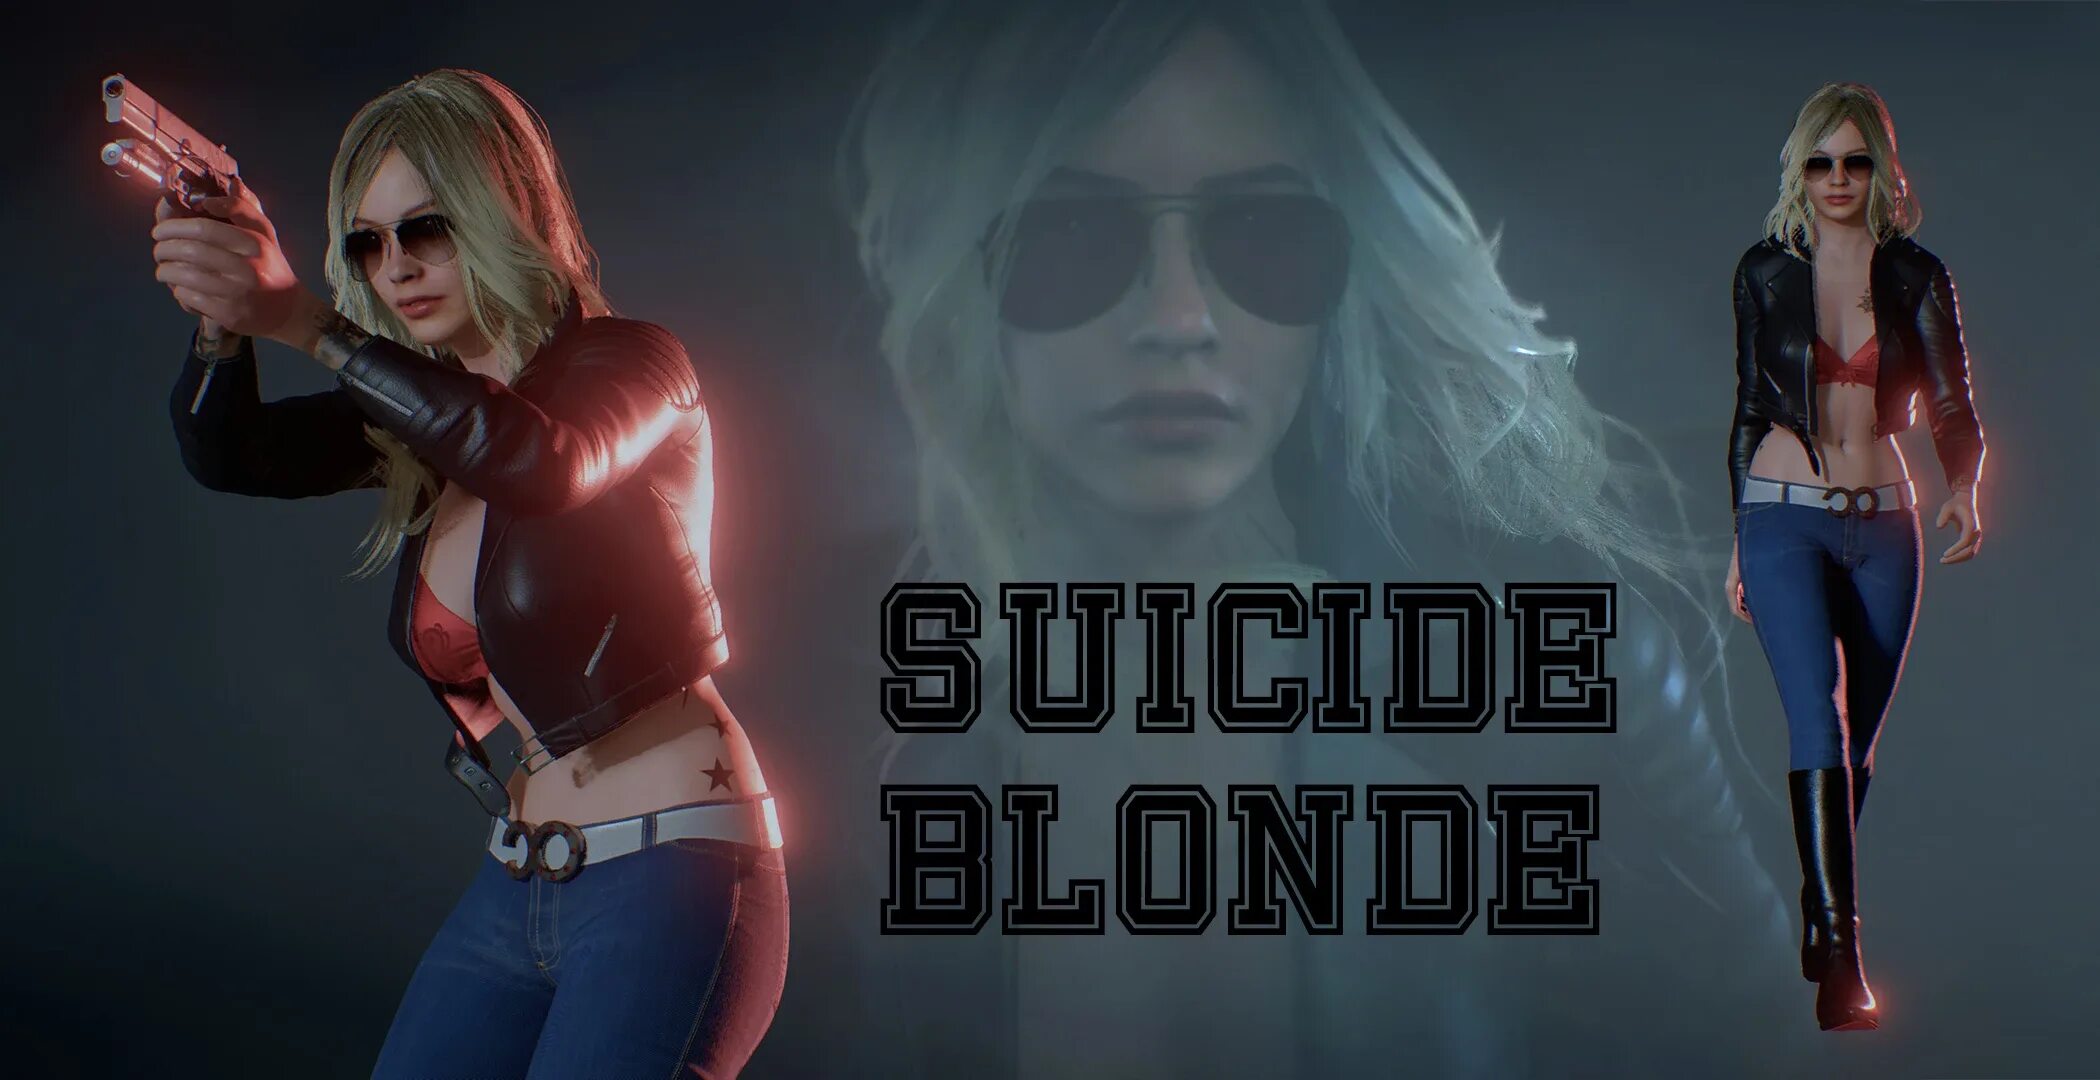 Suicide blonde. Suicide blonde - NVXS.